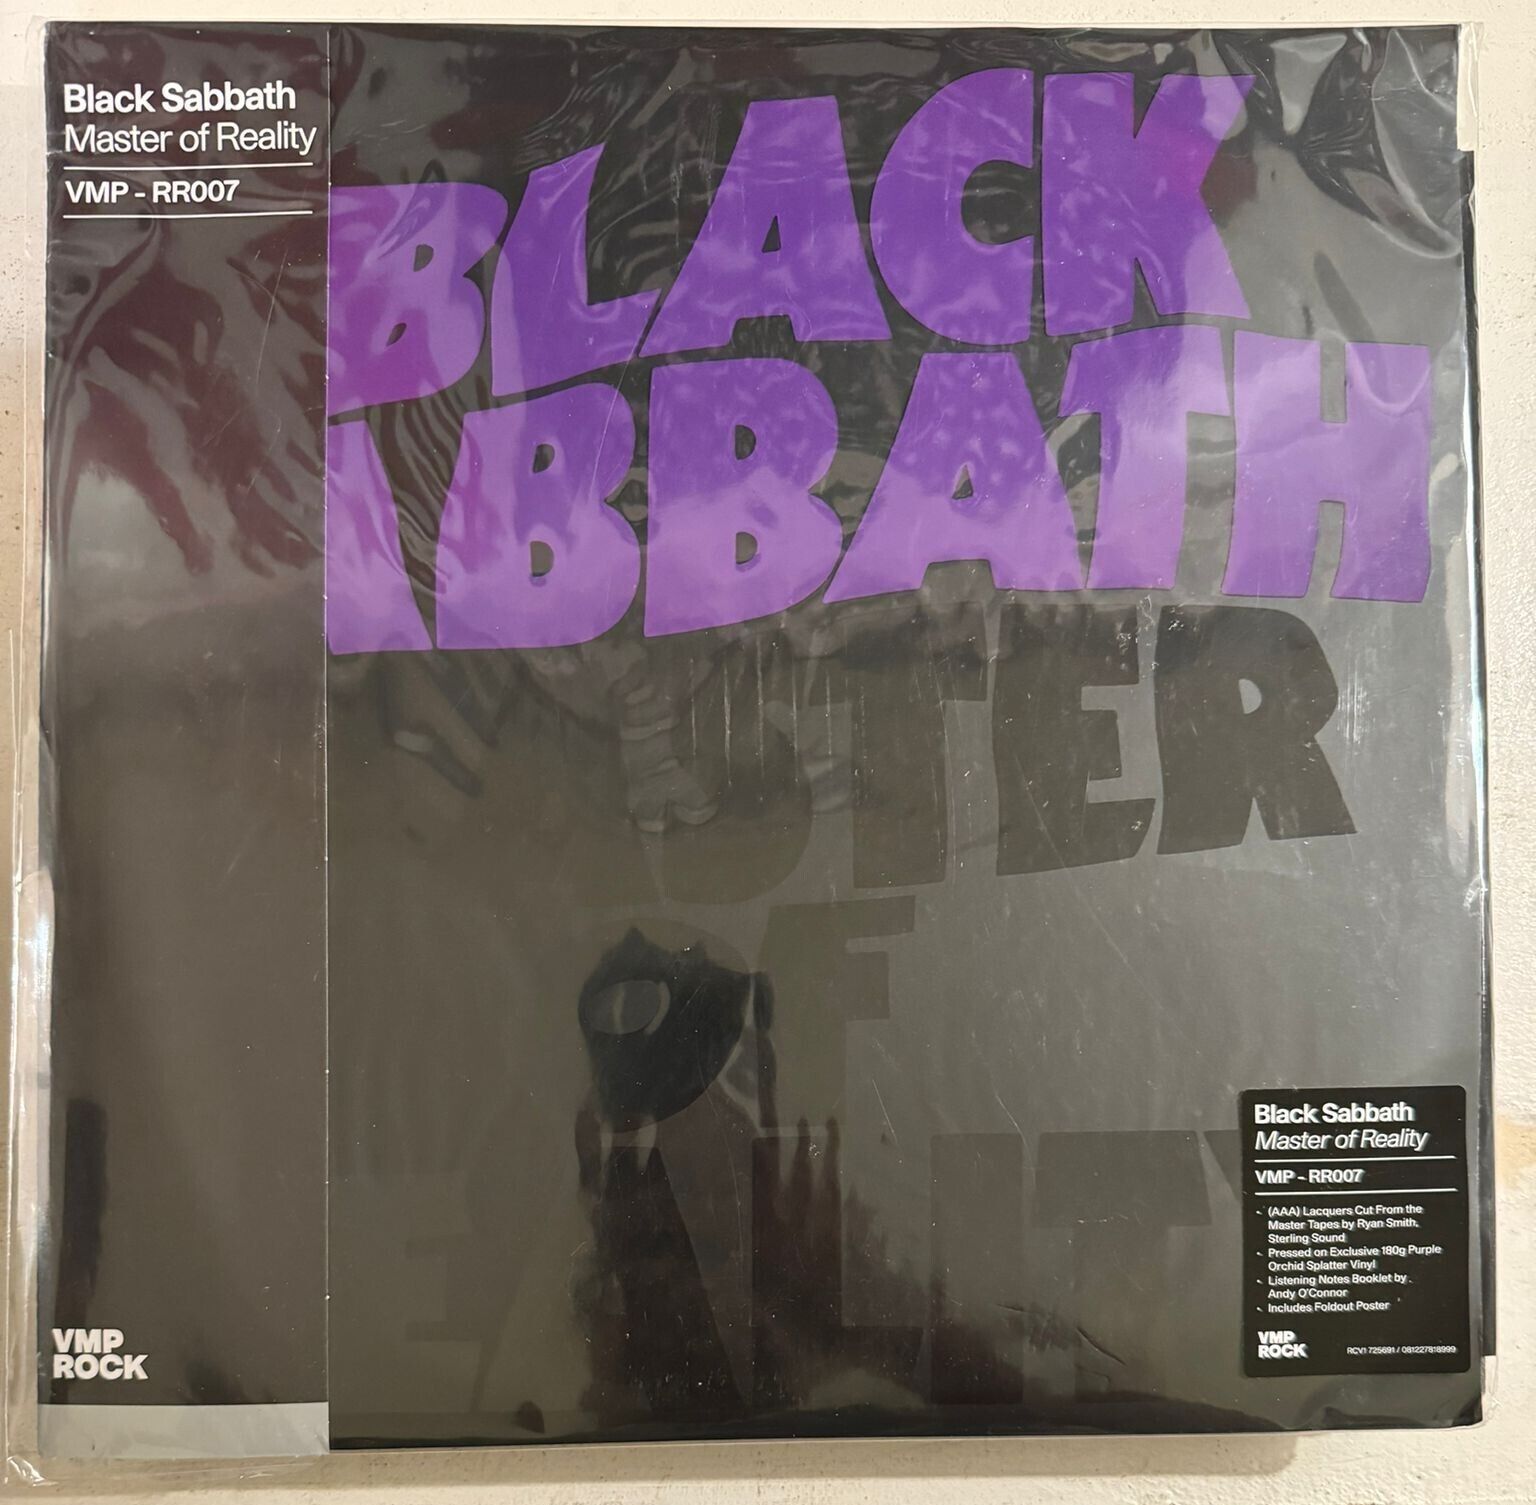 BLACK SABBATH – MASTER OF REALITY - VMP-RR007 180G PURPLE ORCHID SPLATTER - NEW